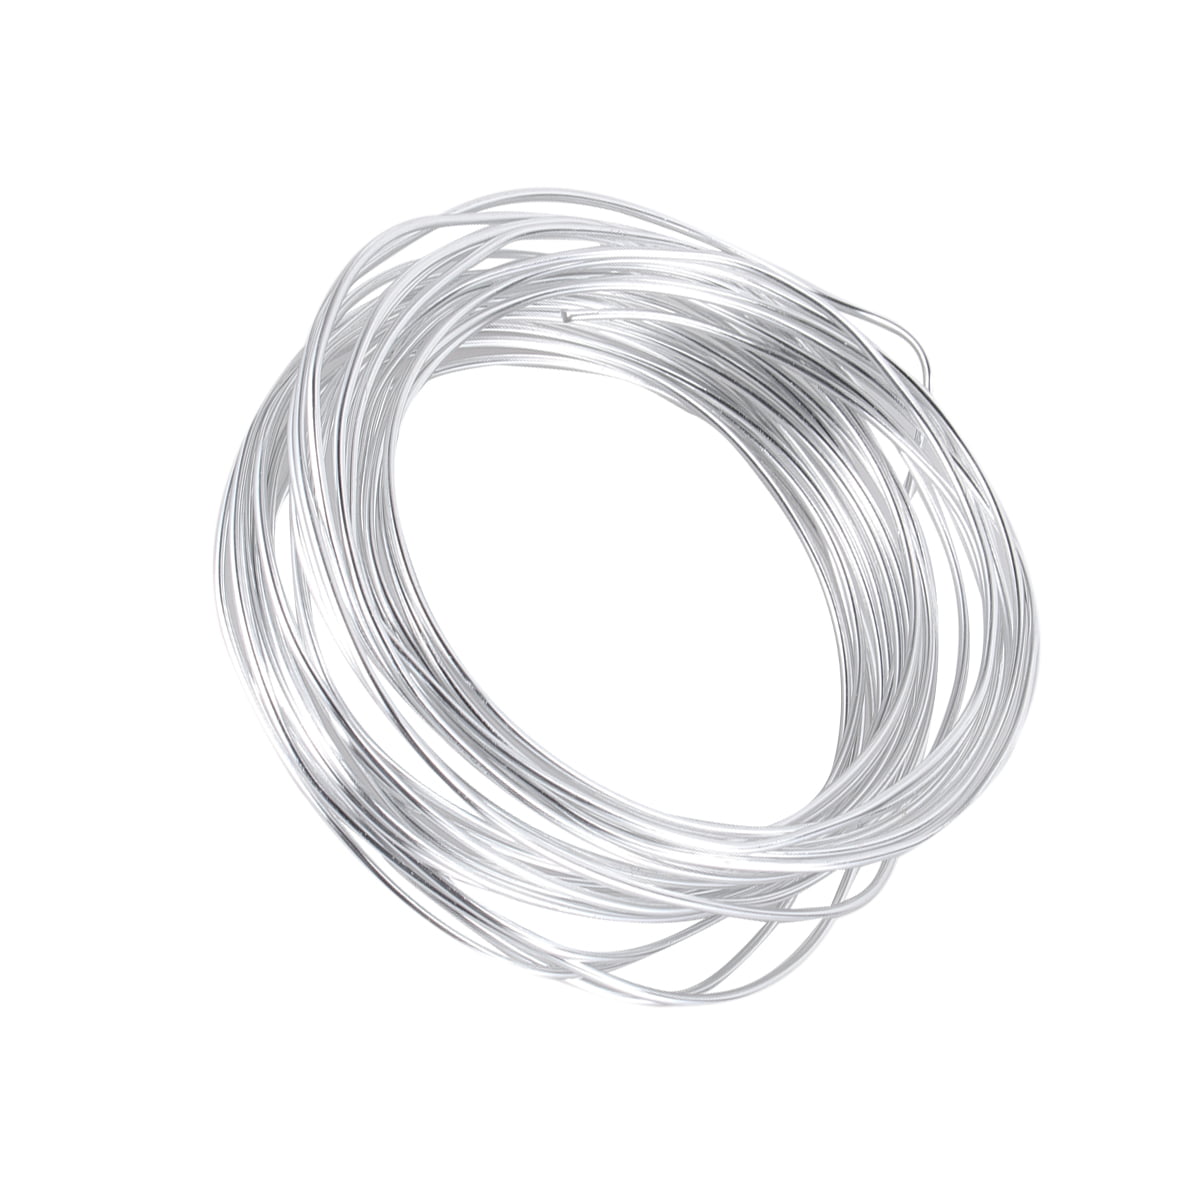 TecUnite Aluminum Wire, Wire Armature, Bendable Metal Craft Wire